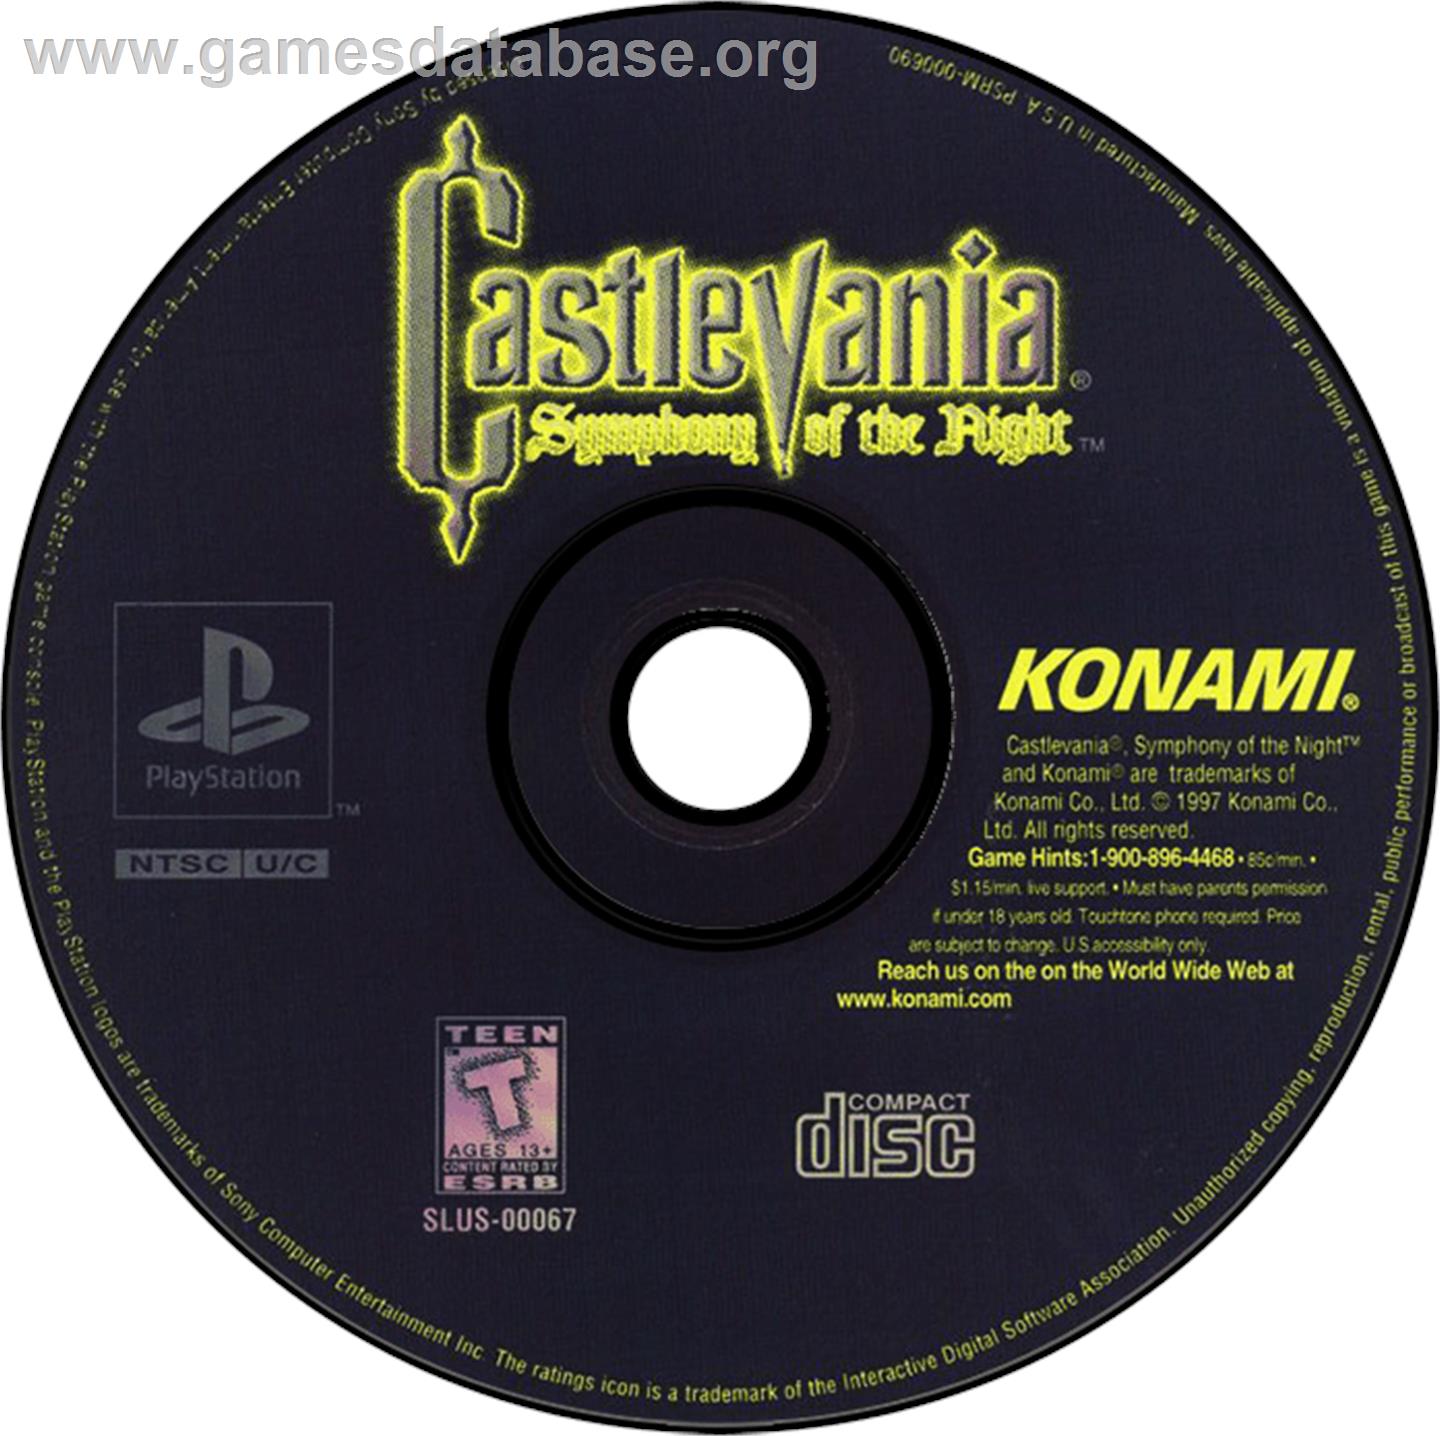 Castlevania: Symphony of the Night - Sony Playstation - Artwork - Disc